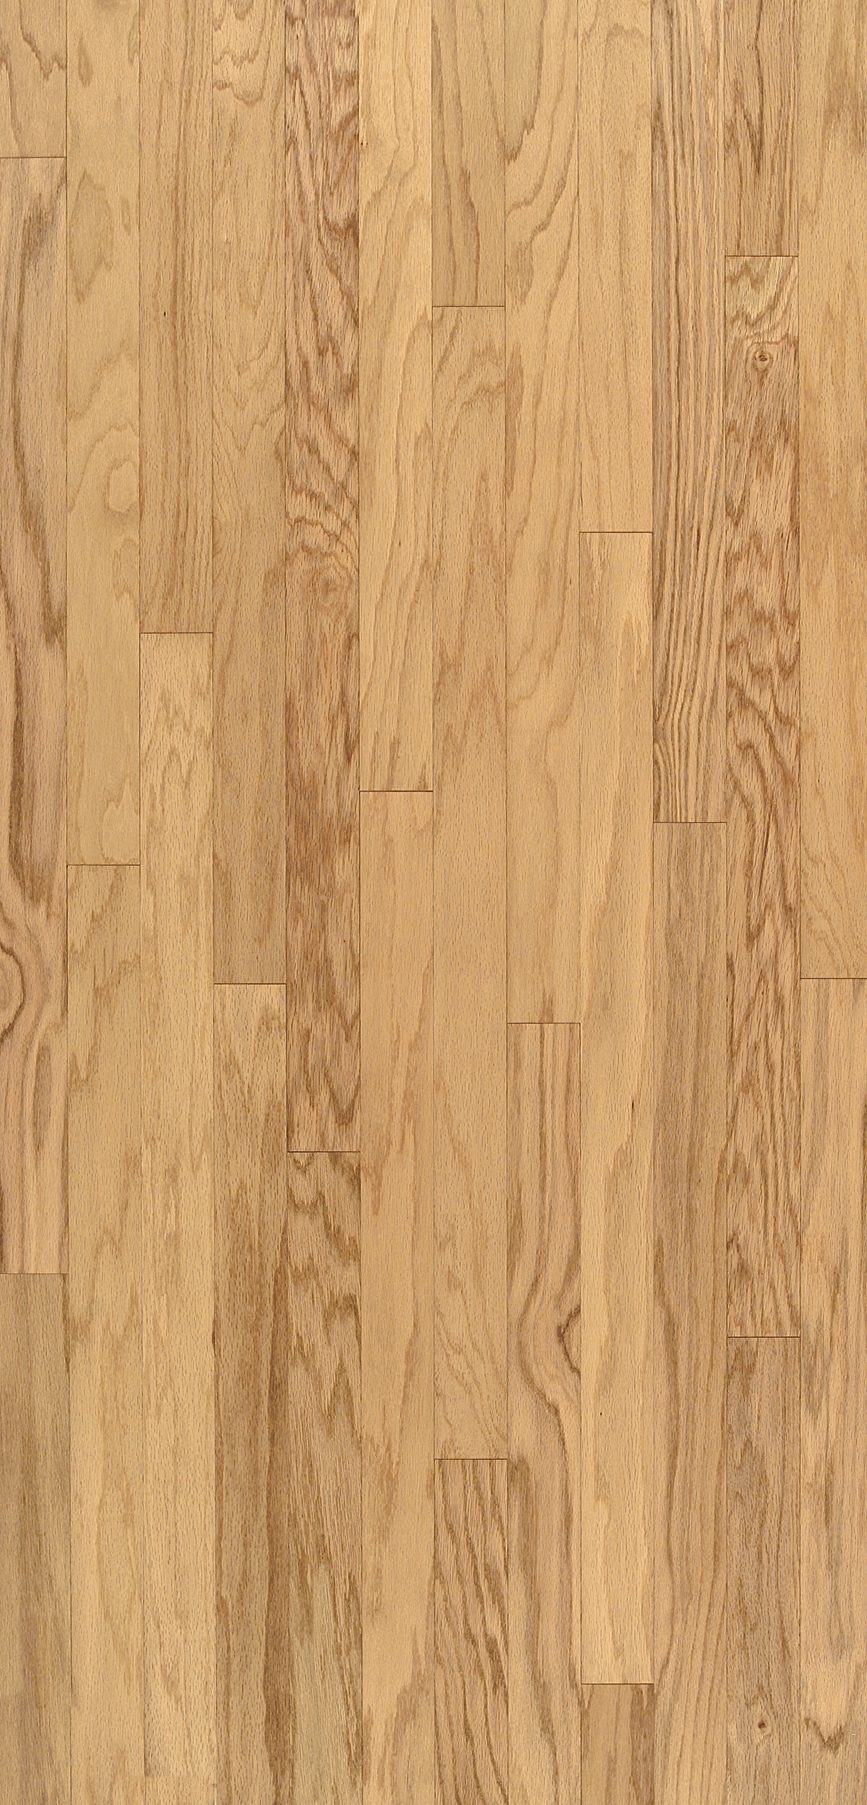 Red Oak Engineered Hardwood E550ee, Bruce Red Oak Natural Hardwood Flooring